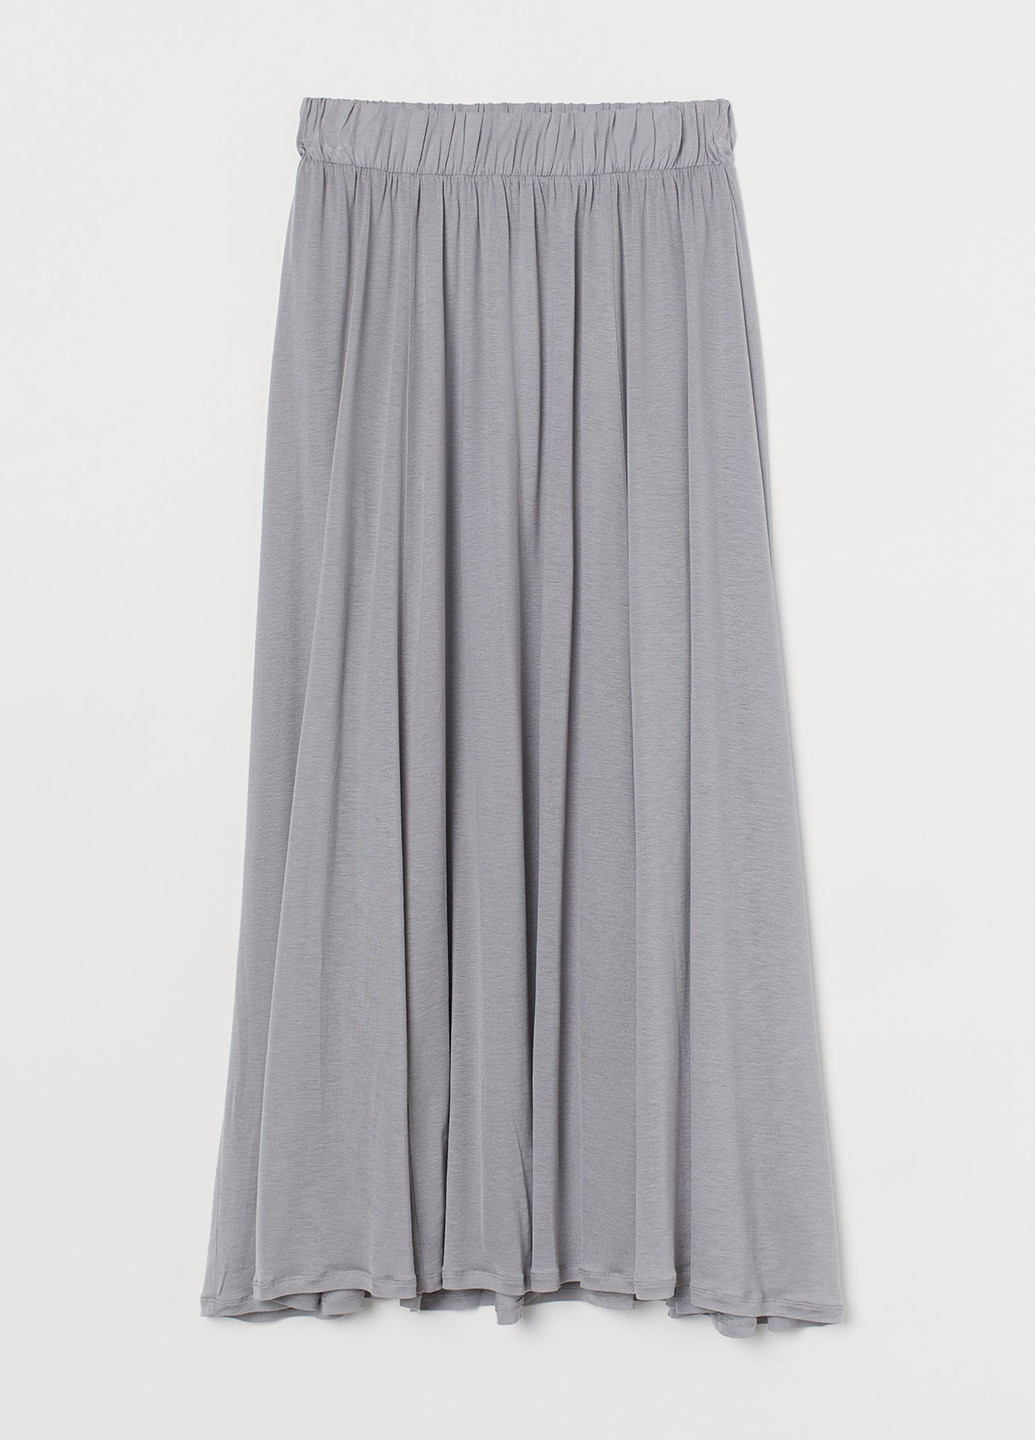 Светло-серая кэжуал меланж юбка H&M клешированная